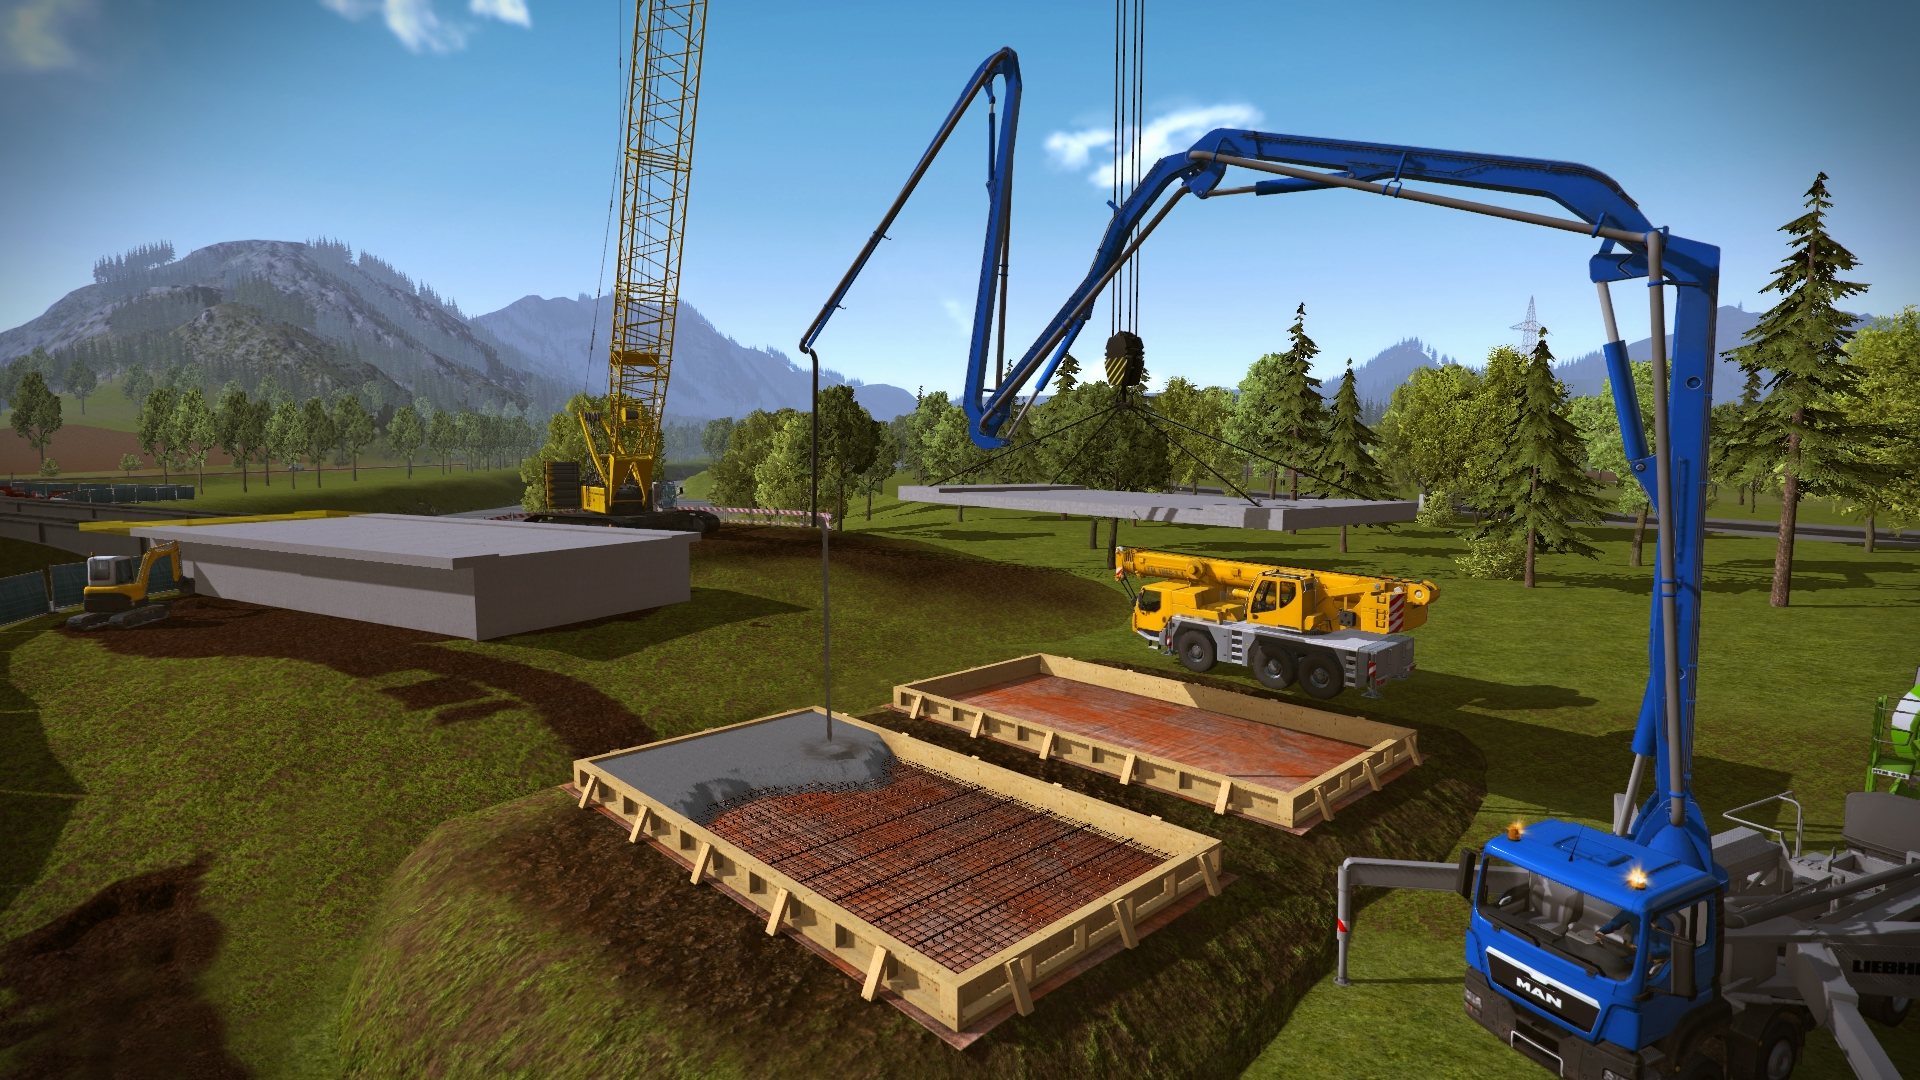 Construction Simulator 2015 - Liebherr LR 1300 DLC Steam CD Key